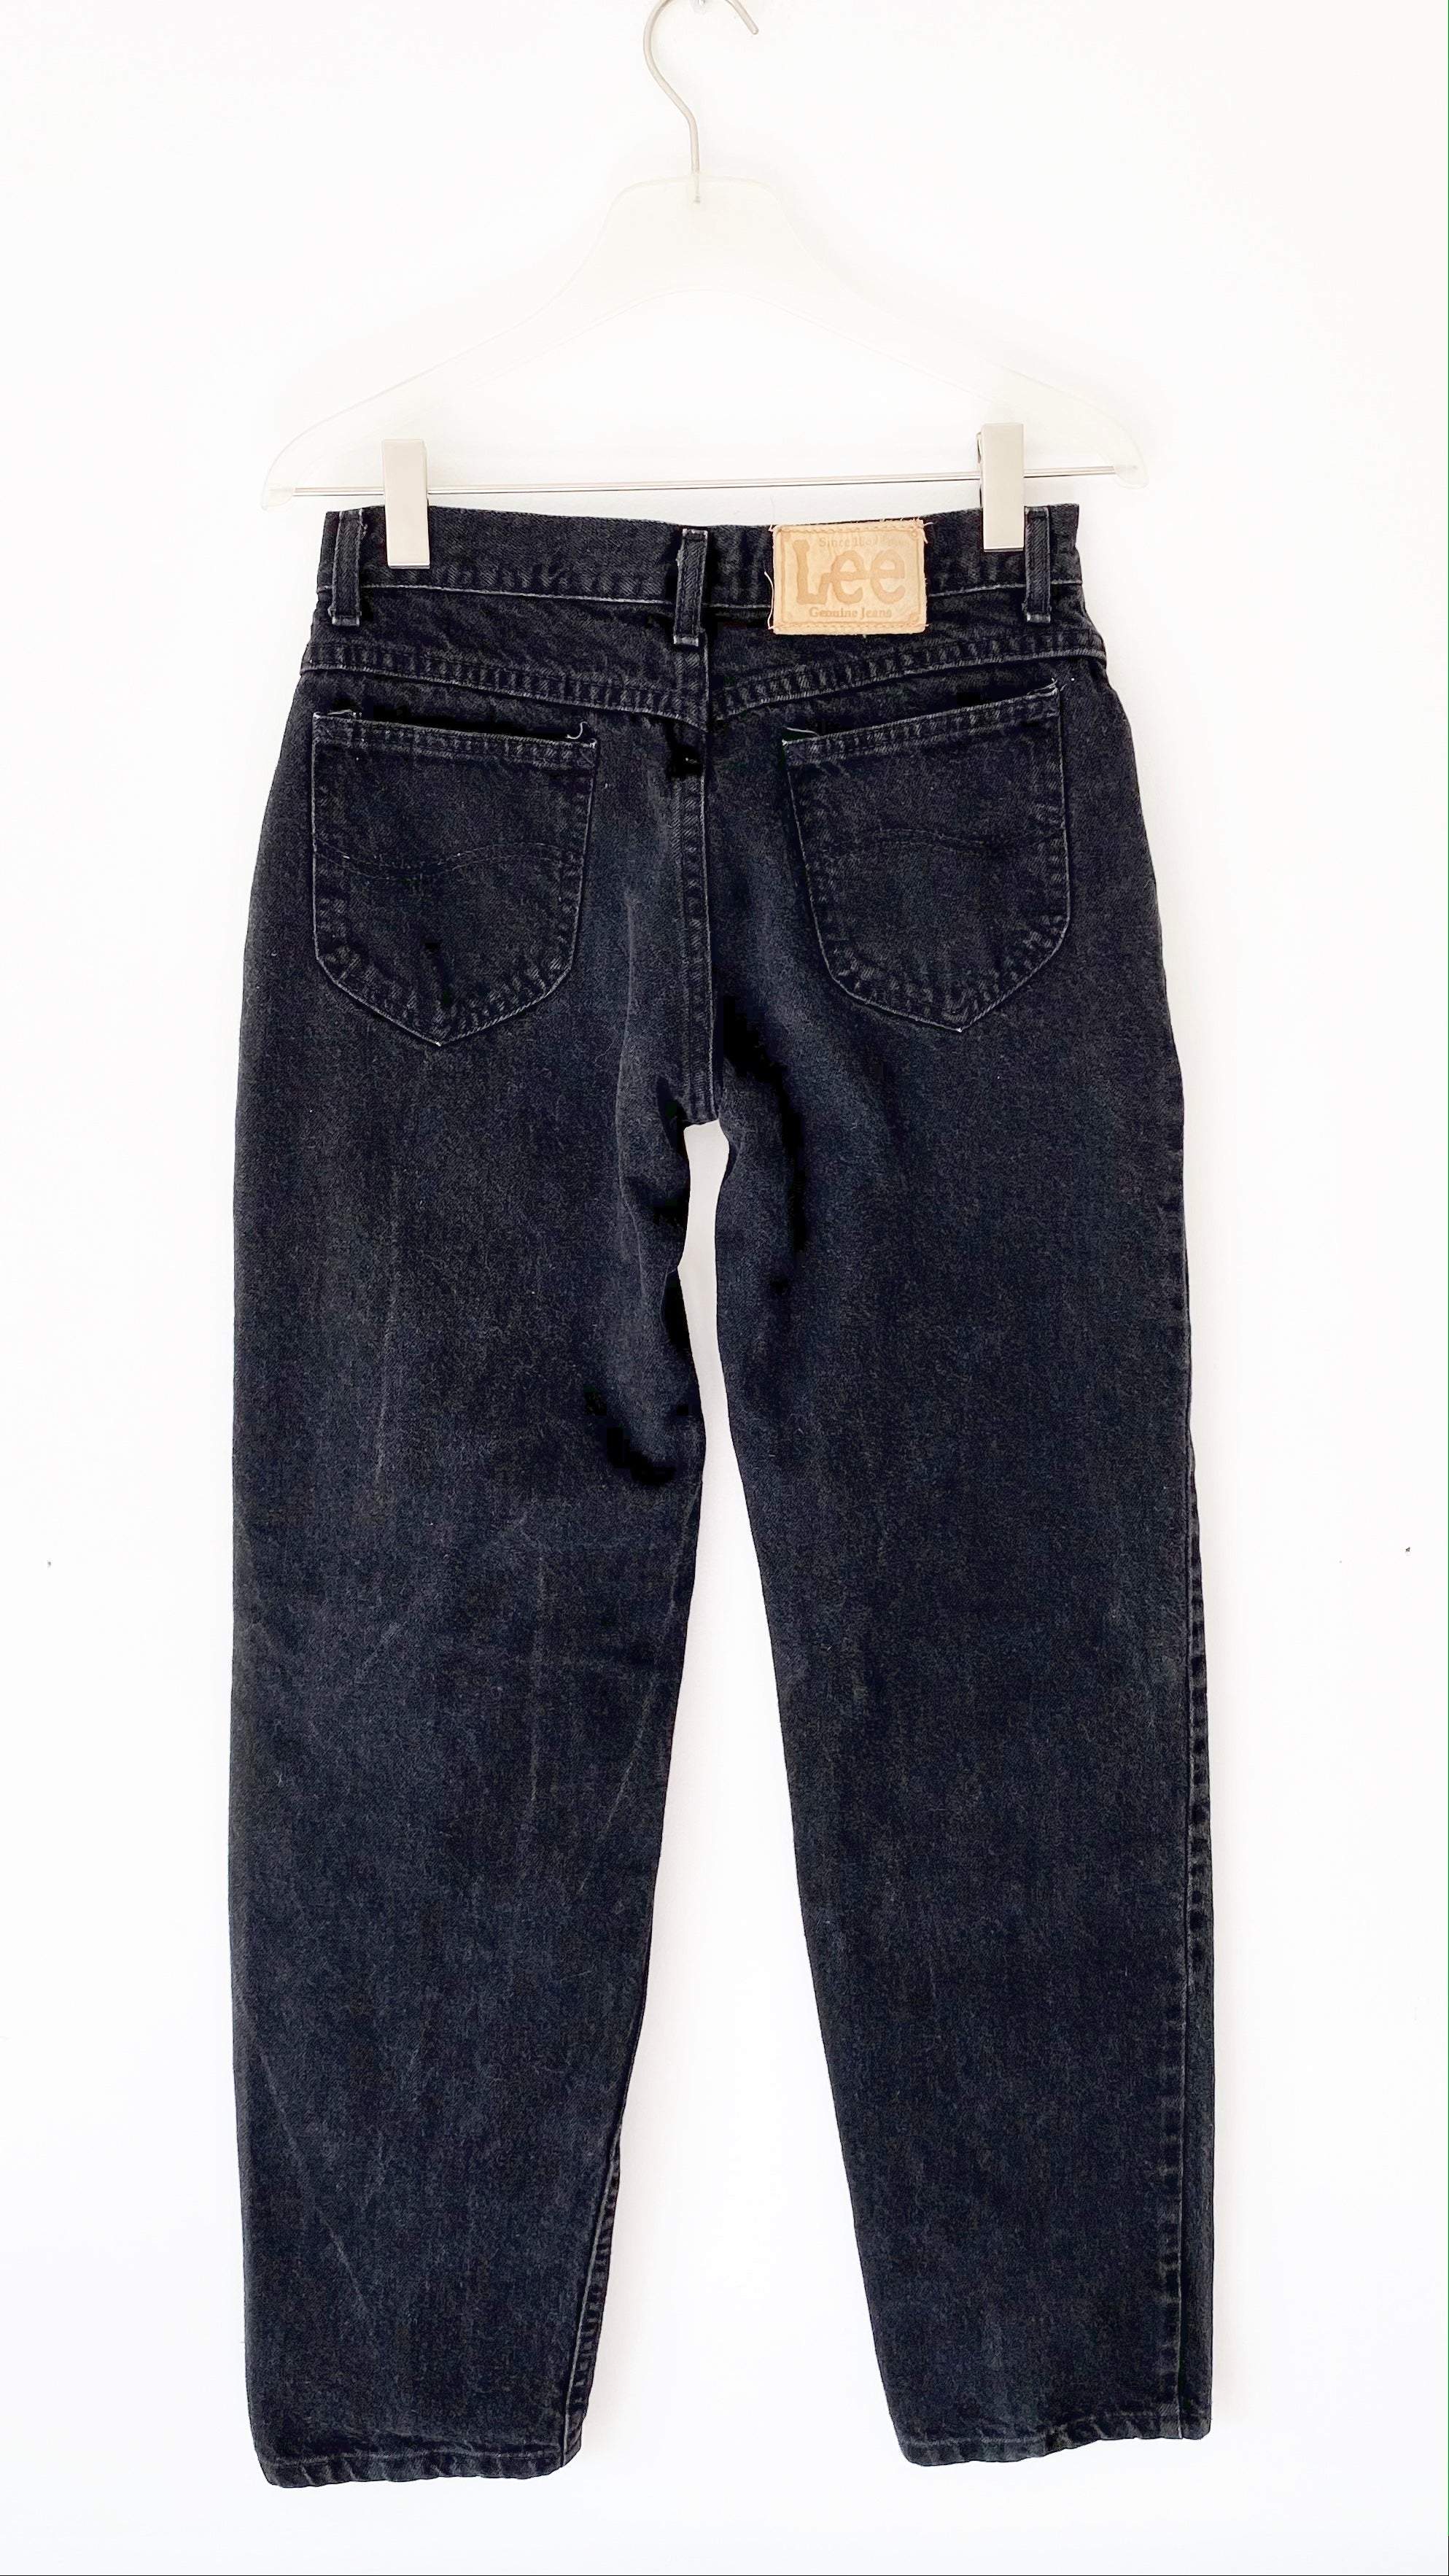 Vintage LEEs Made in USA Black Wash Jeans size 28